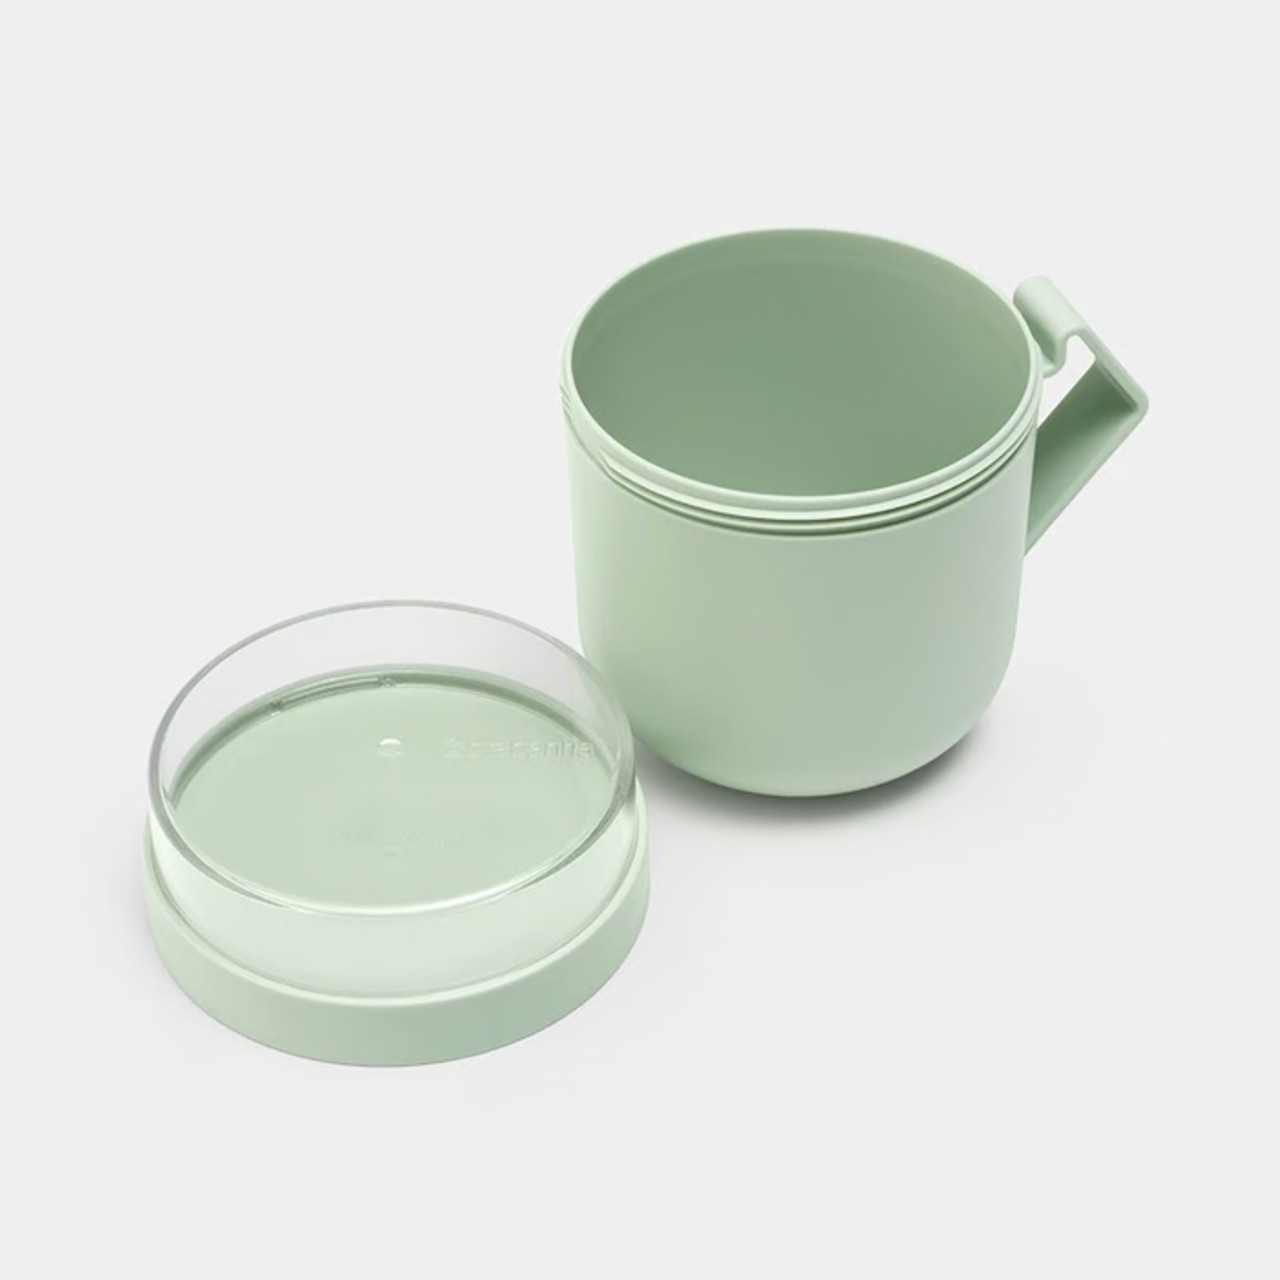 Make & Take Soup Mug 0.6L - Jade Green *in-store